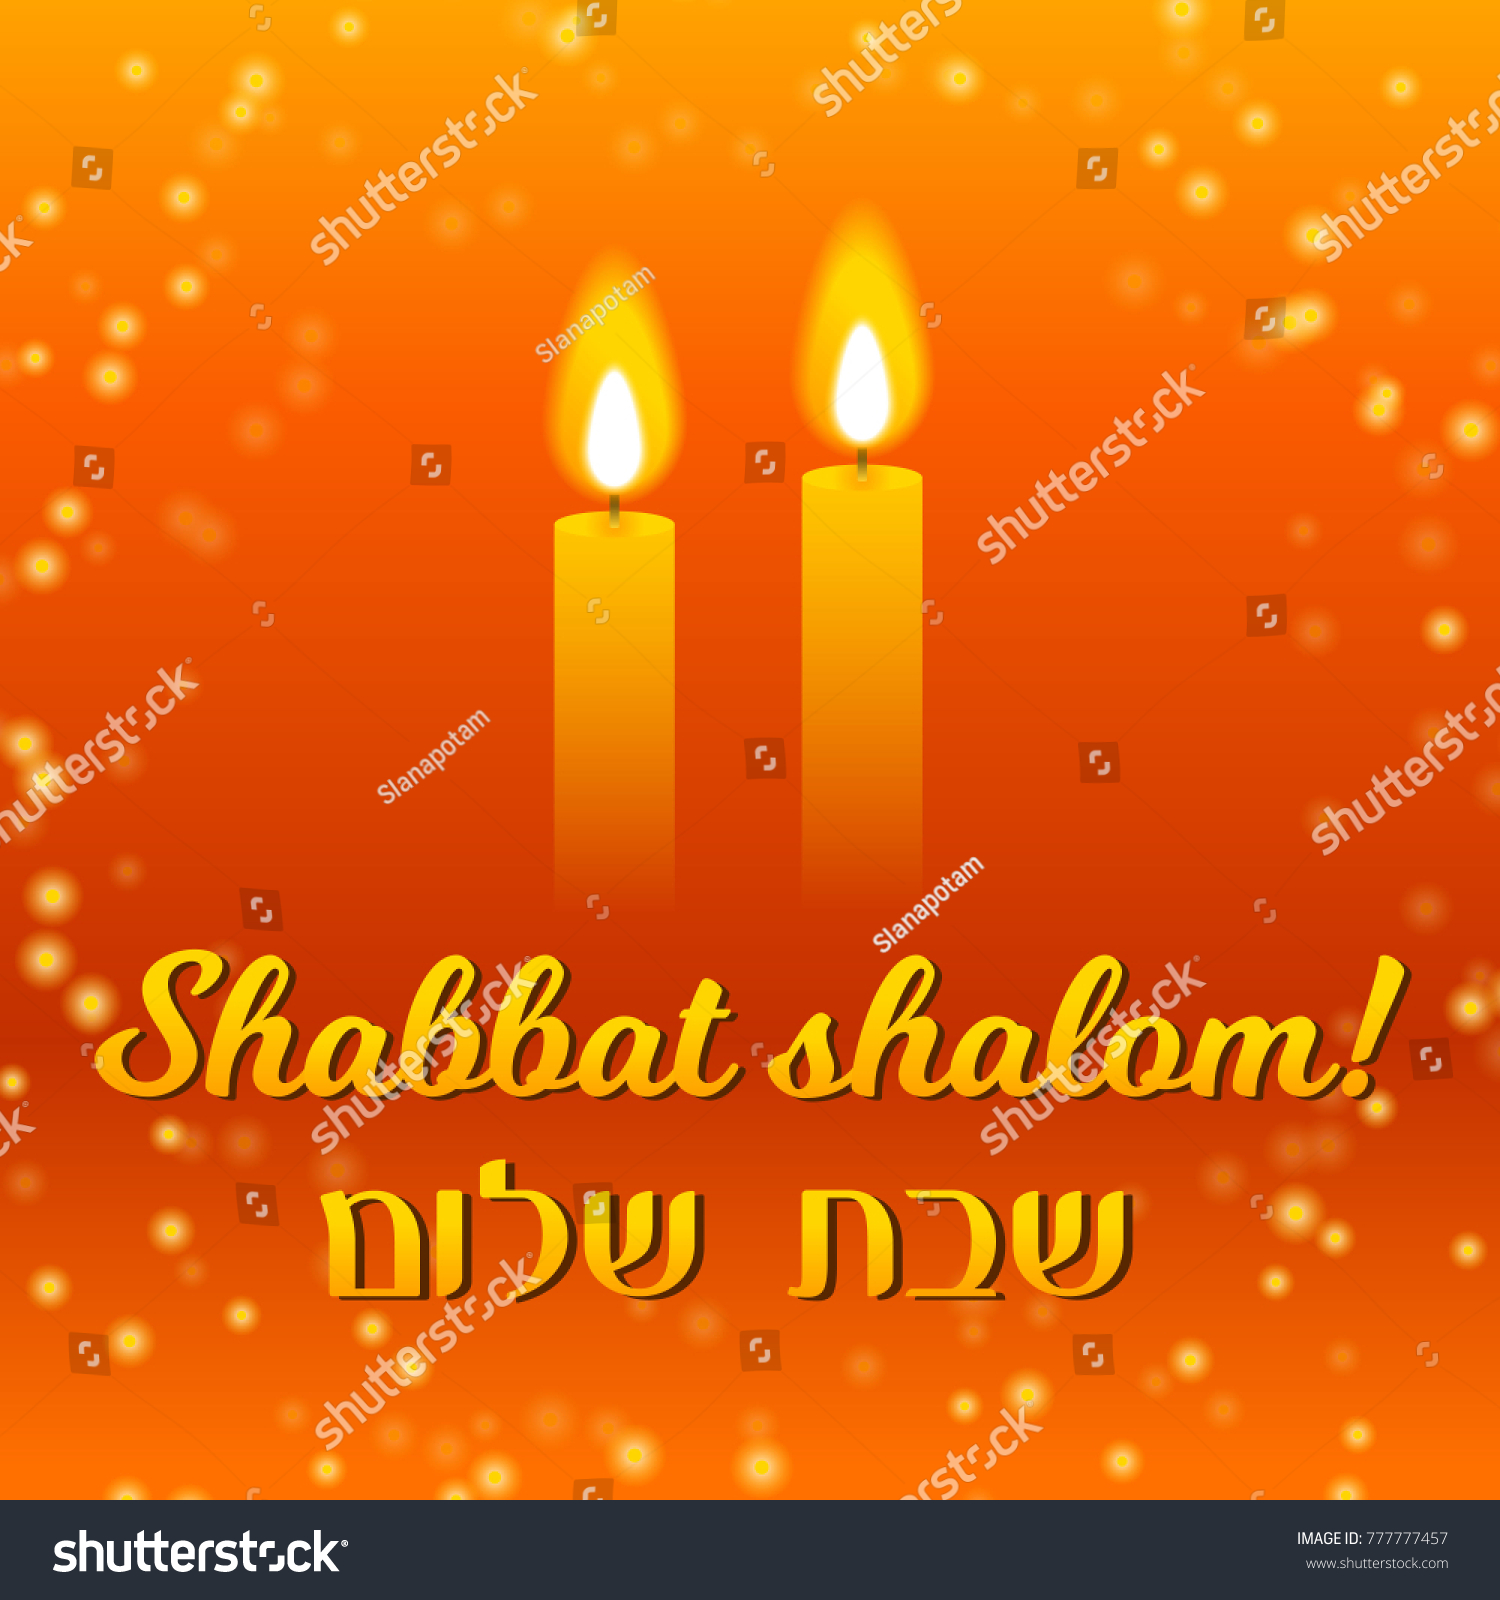 Shabbat shalom lettering greeting card vector illustration Two burning shabbat candles and bokeh